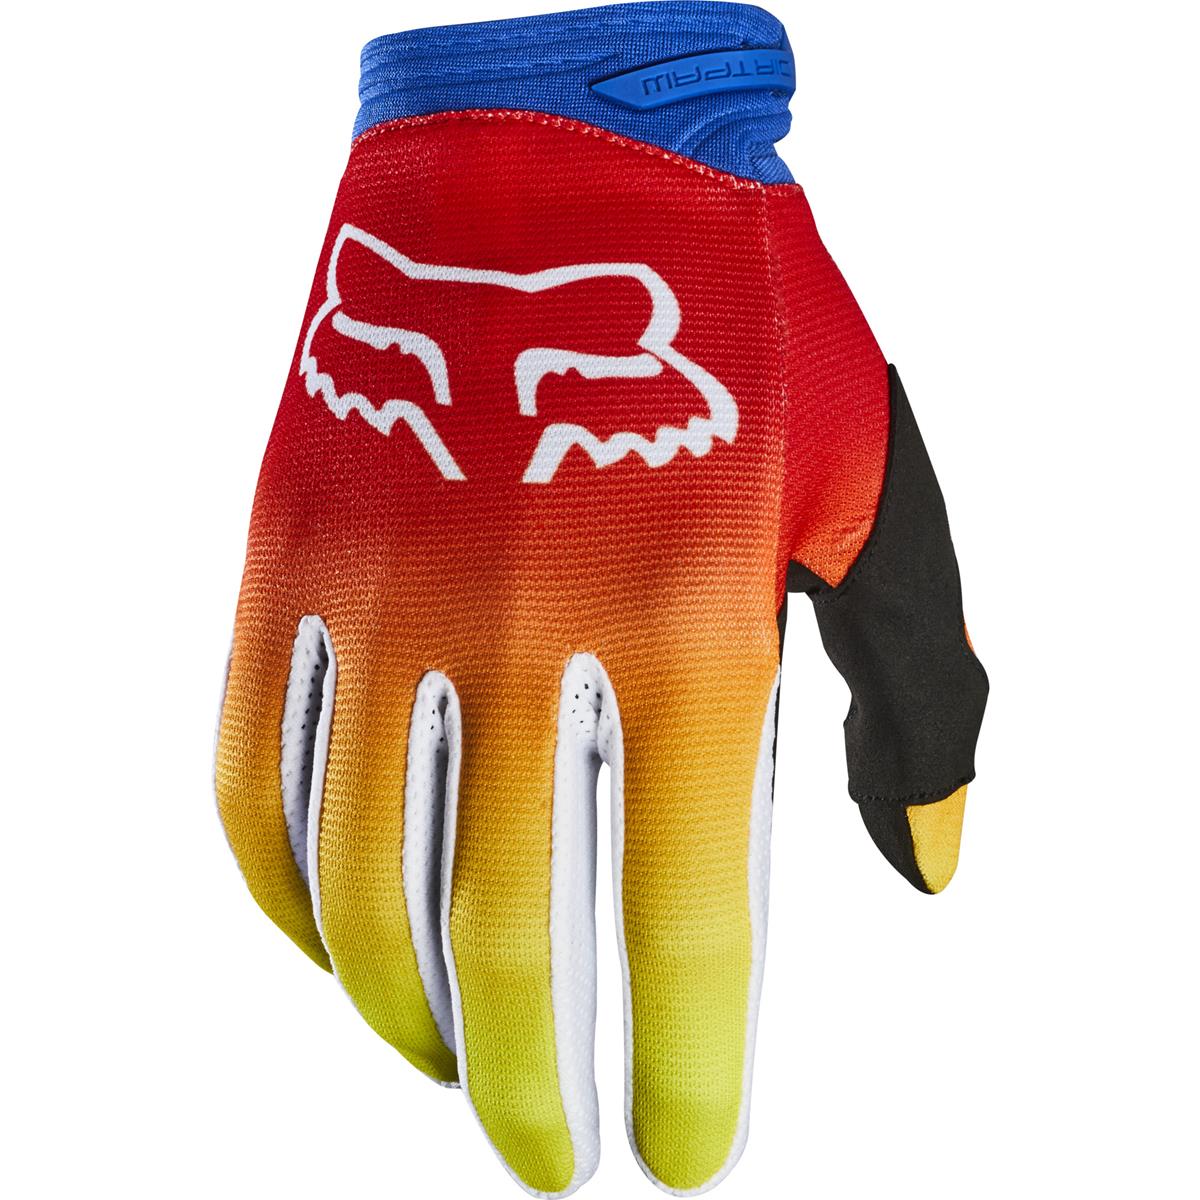 Fox Handschuhe Dirtpaw Fyce - Blau/Rot